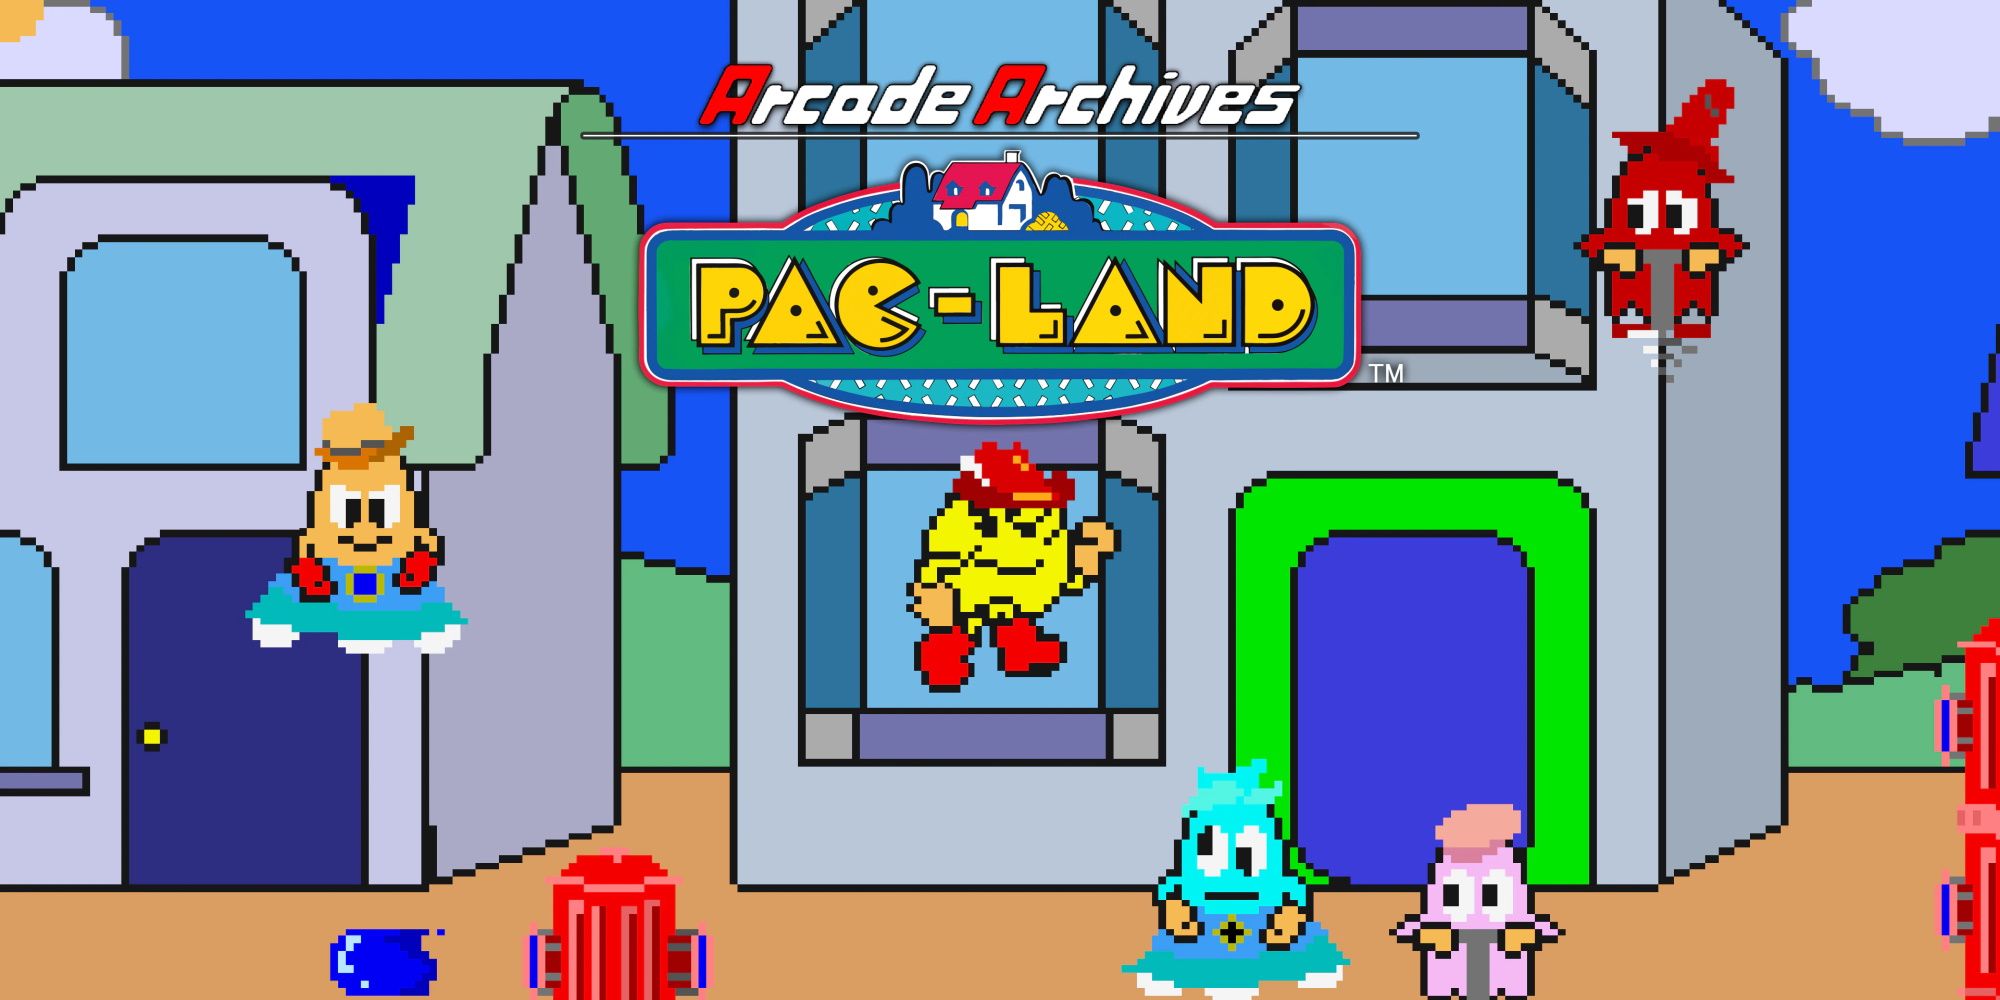 Pac-Land - via Arcade Archives